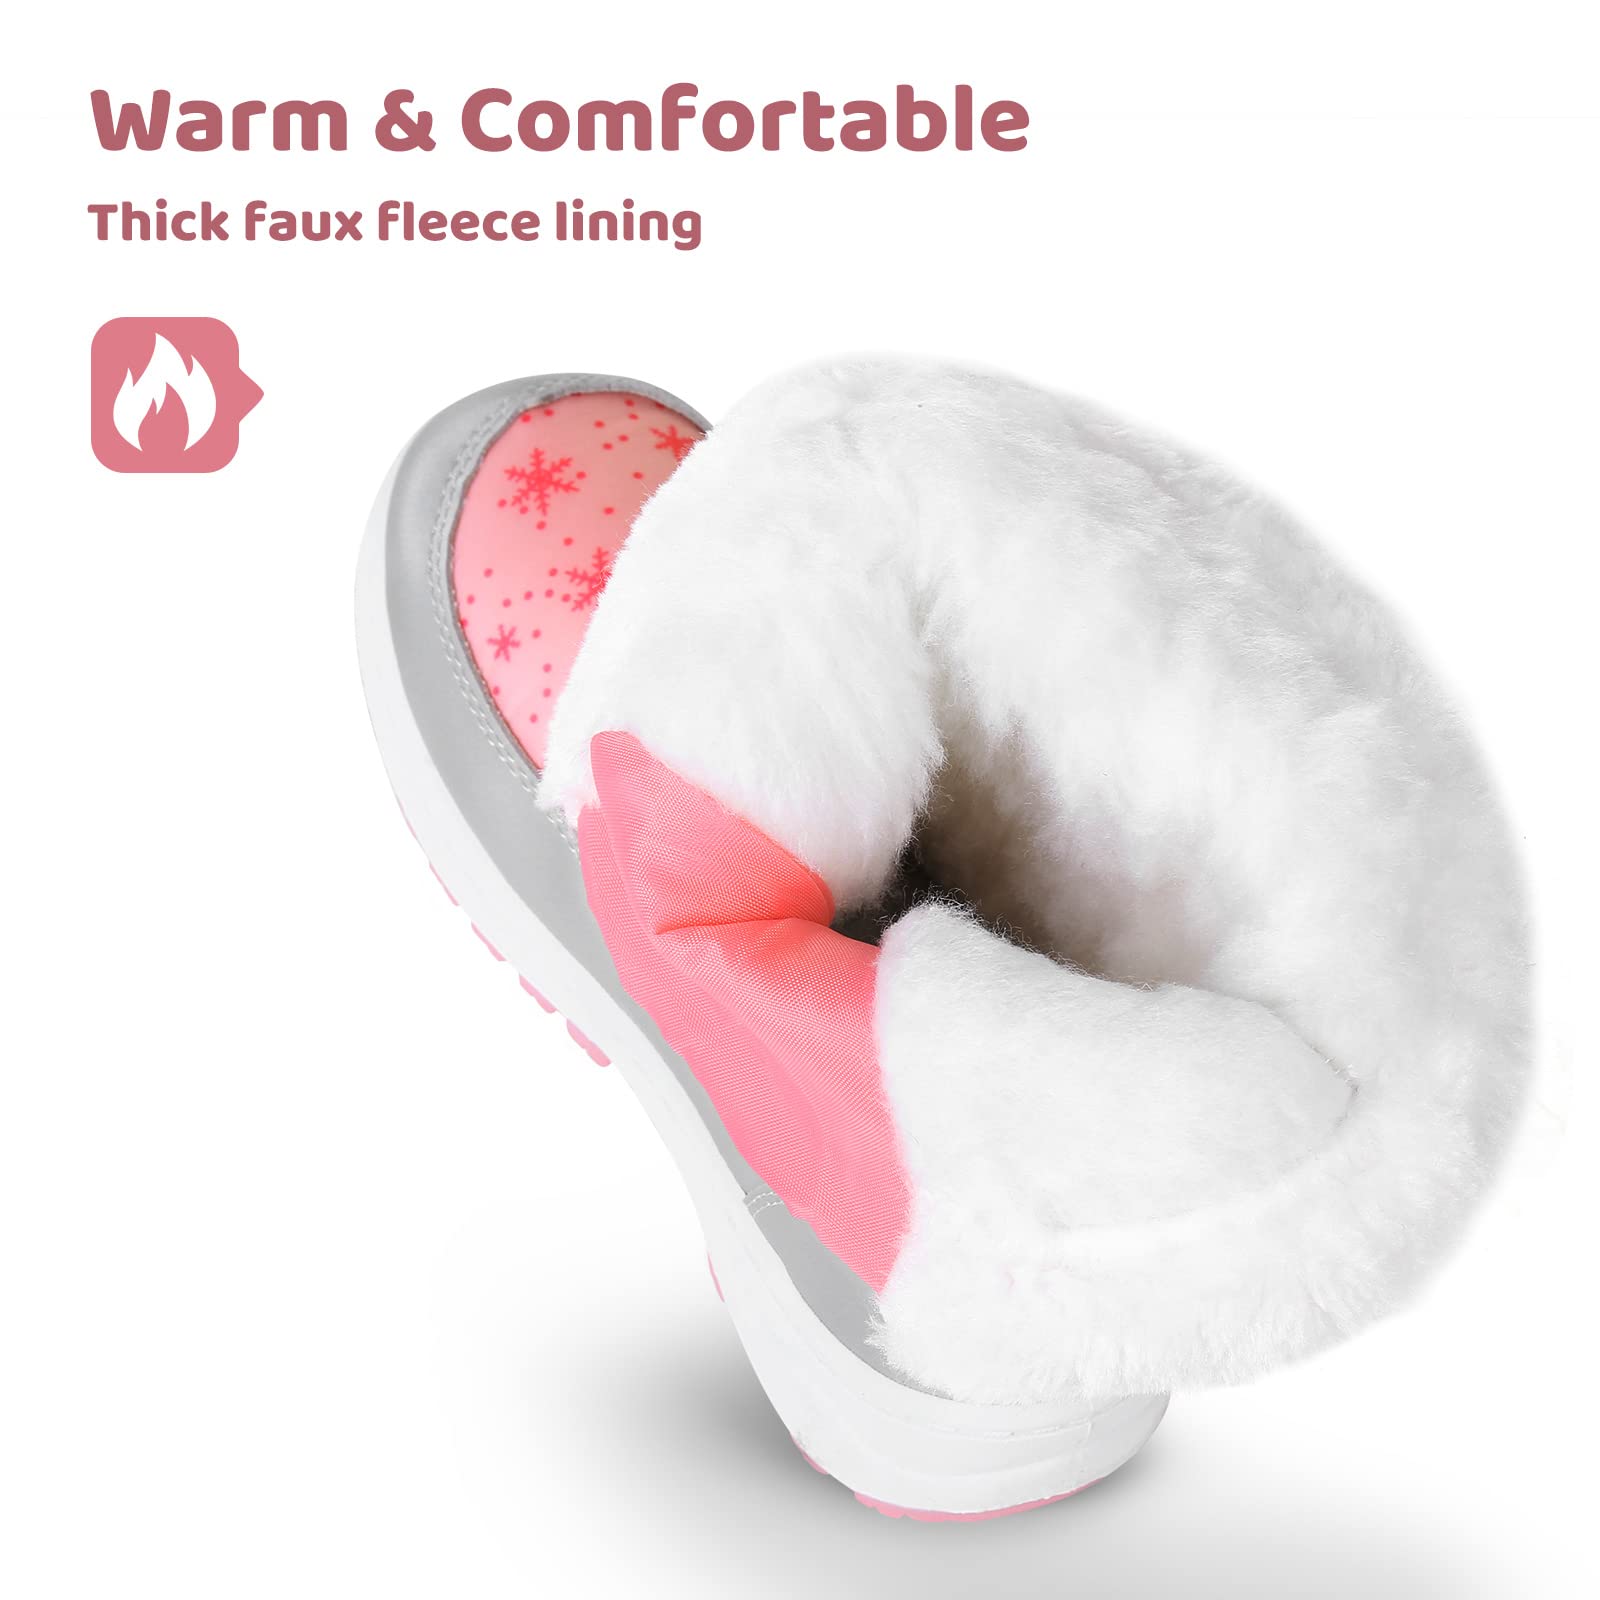 Apakowa Kids Girls Boys Insulated Fur Winter Warm Snow Boots (Toddler/Little Kid)